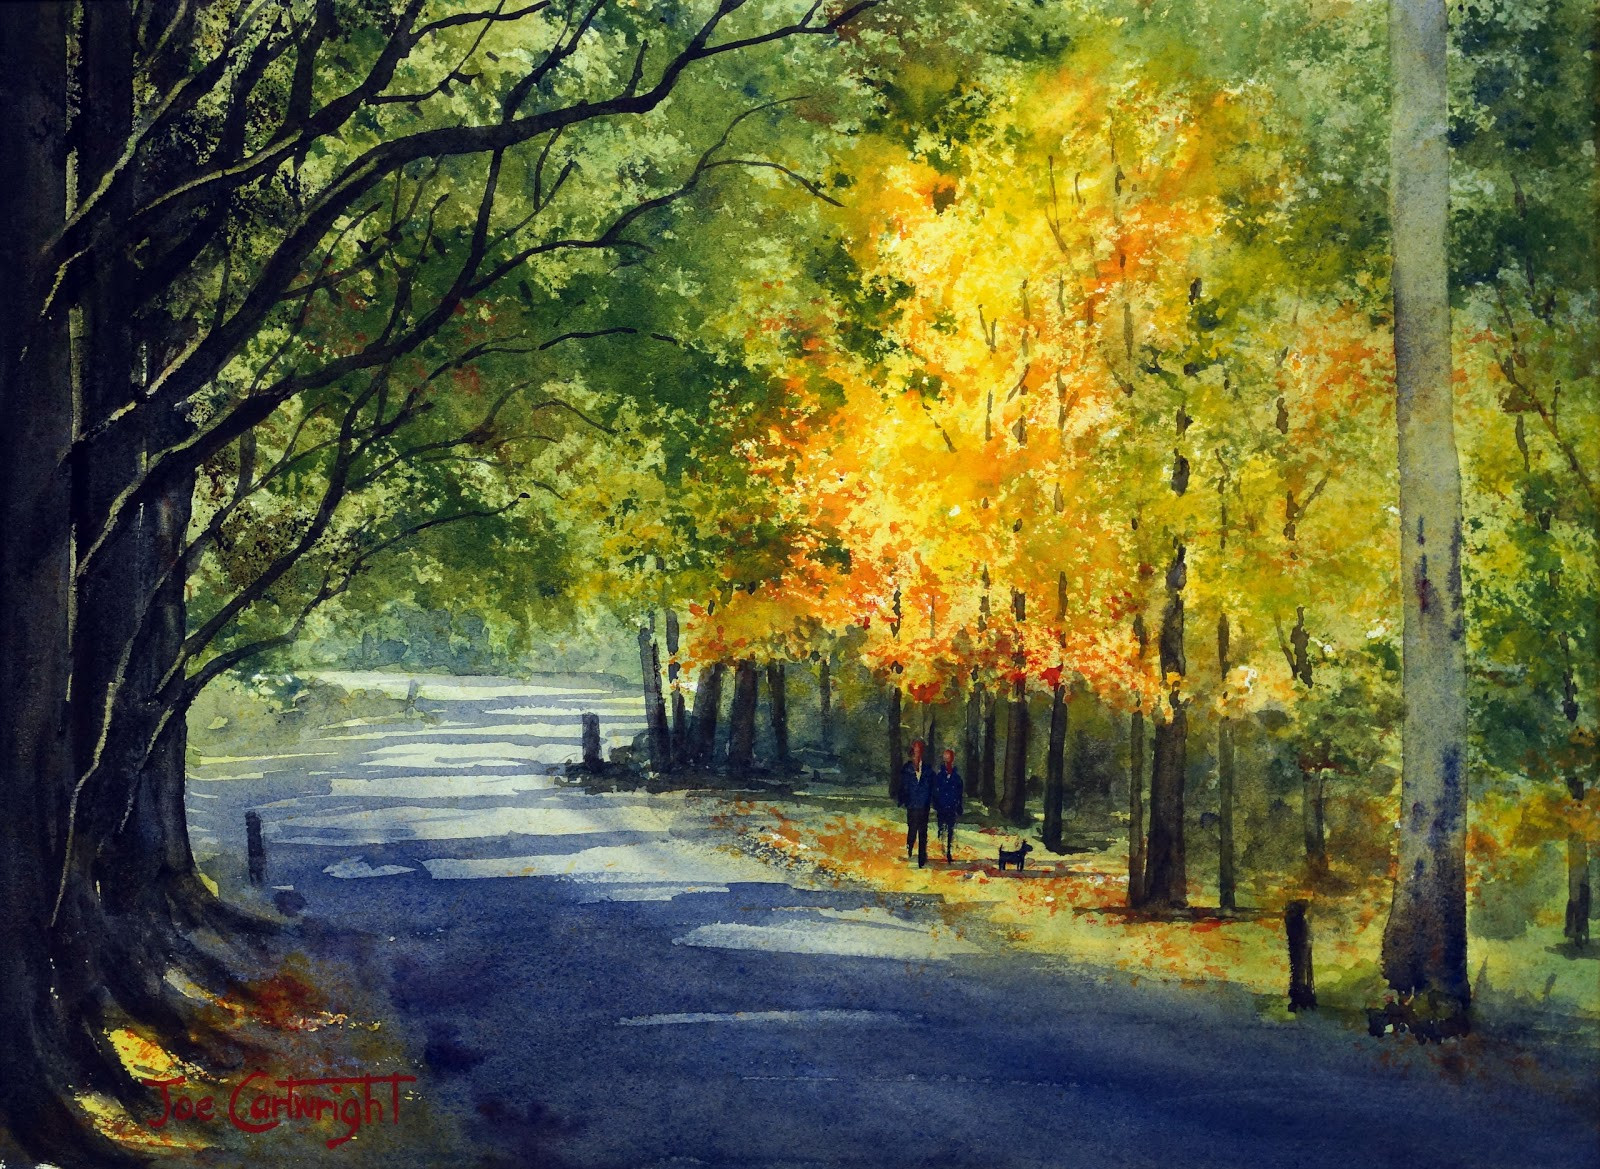 Best ideas about Watercolor Painting Landscape
. Save or Pin Joe Cartwright s Watercolor Blog Watercolor Landscape Now.